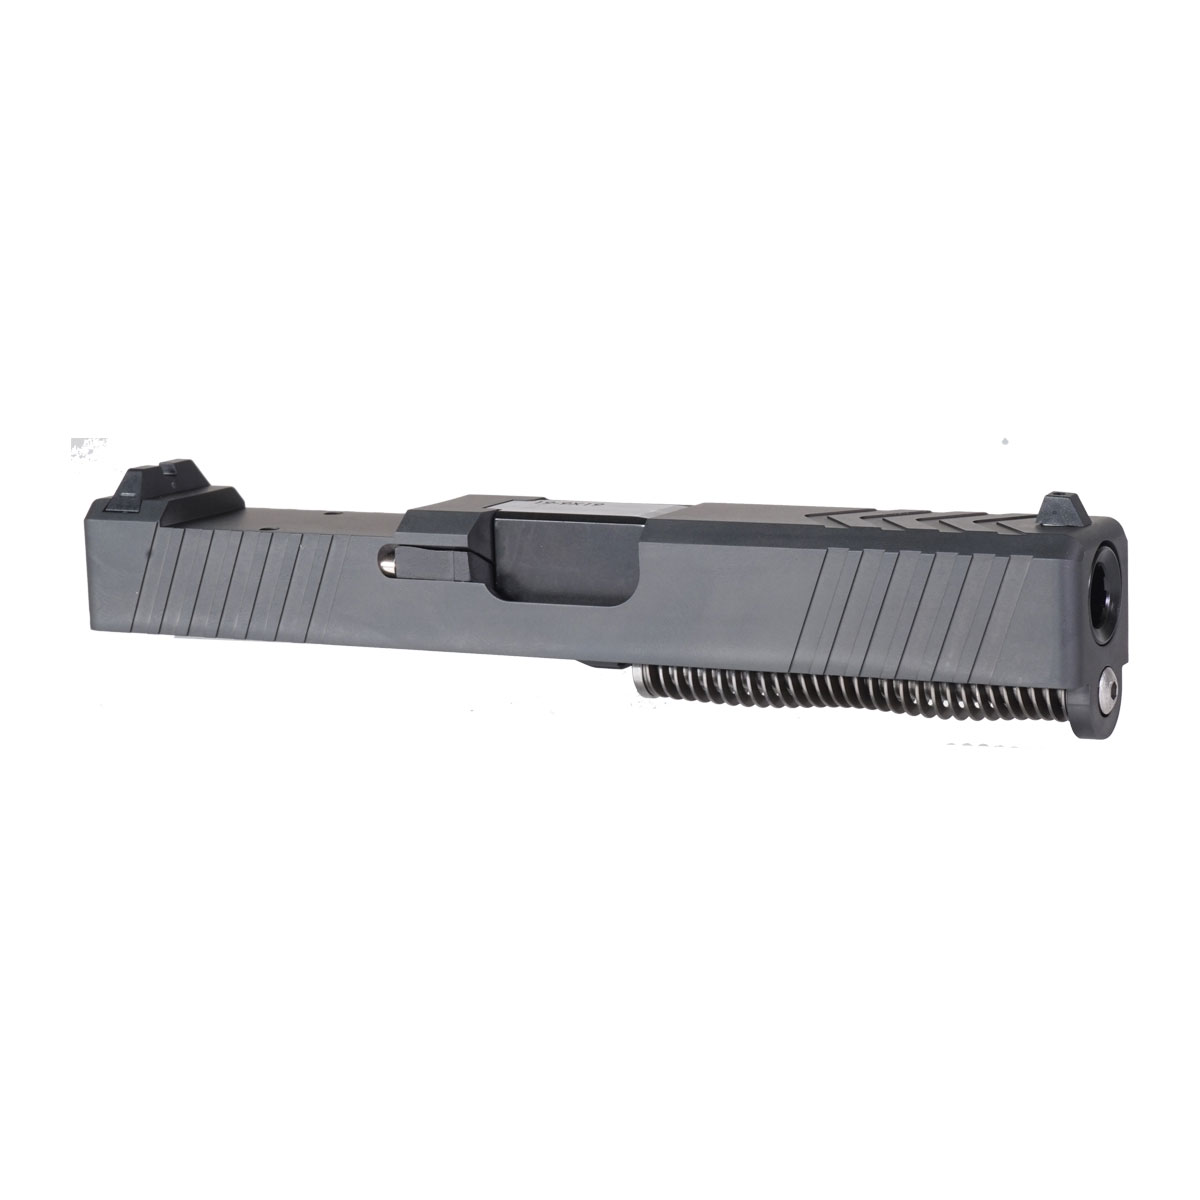 DD 'The Petersen' 9mm Complete Slide Kit - Glock 19 Gen 1-3 Compatible